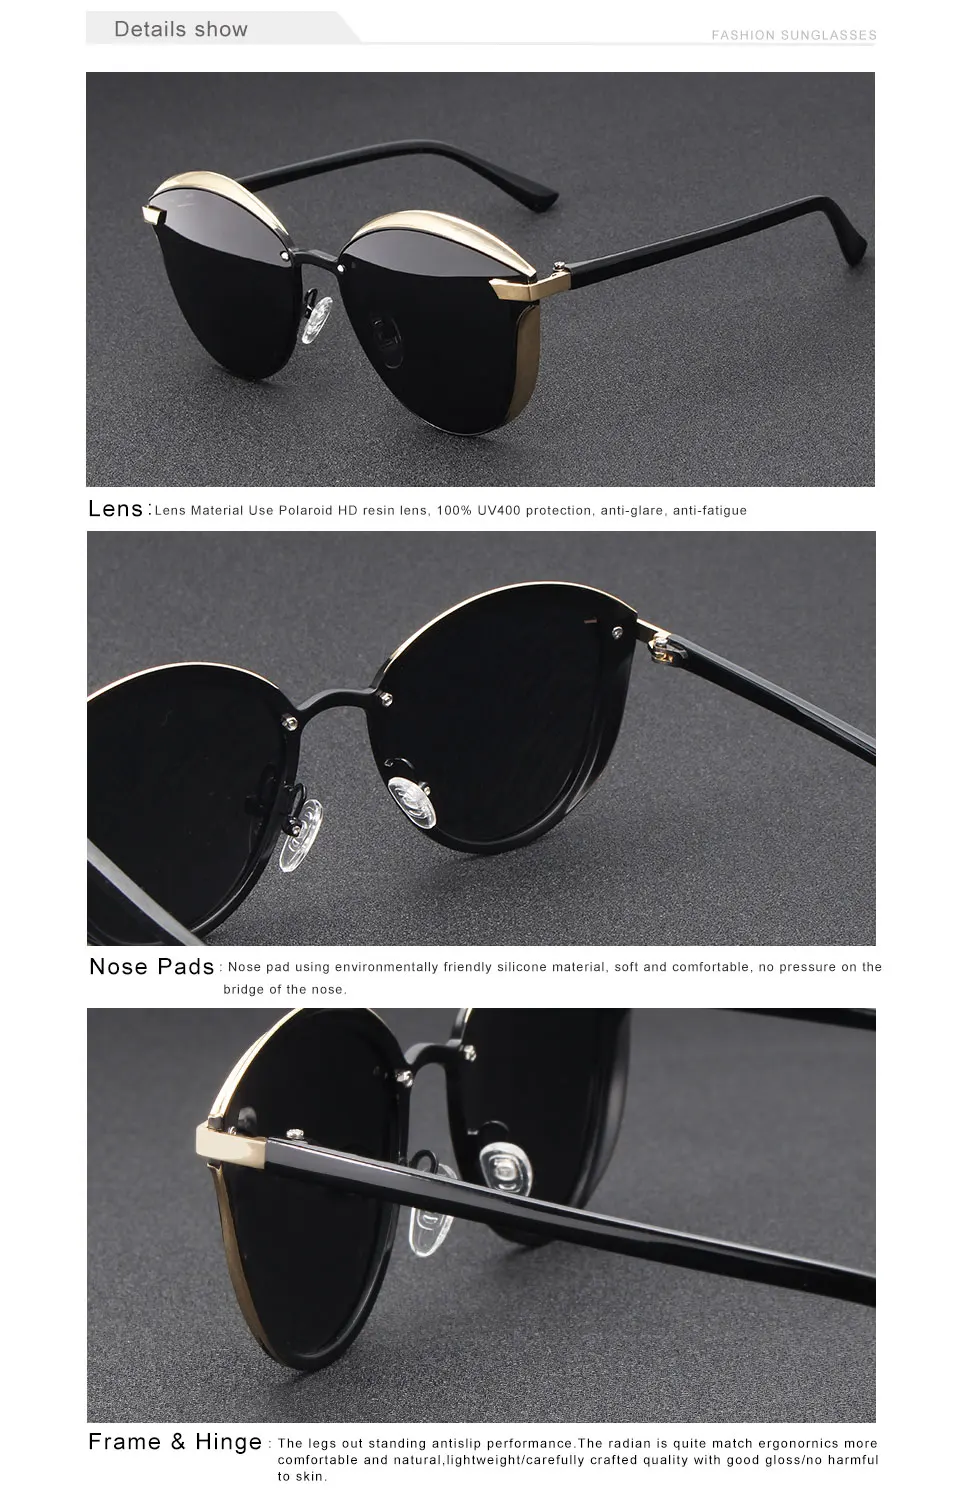 KINGSEVEN Cat Eye Sunglasses For Women Polarized Vintage Shades